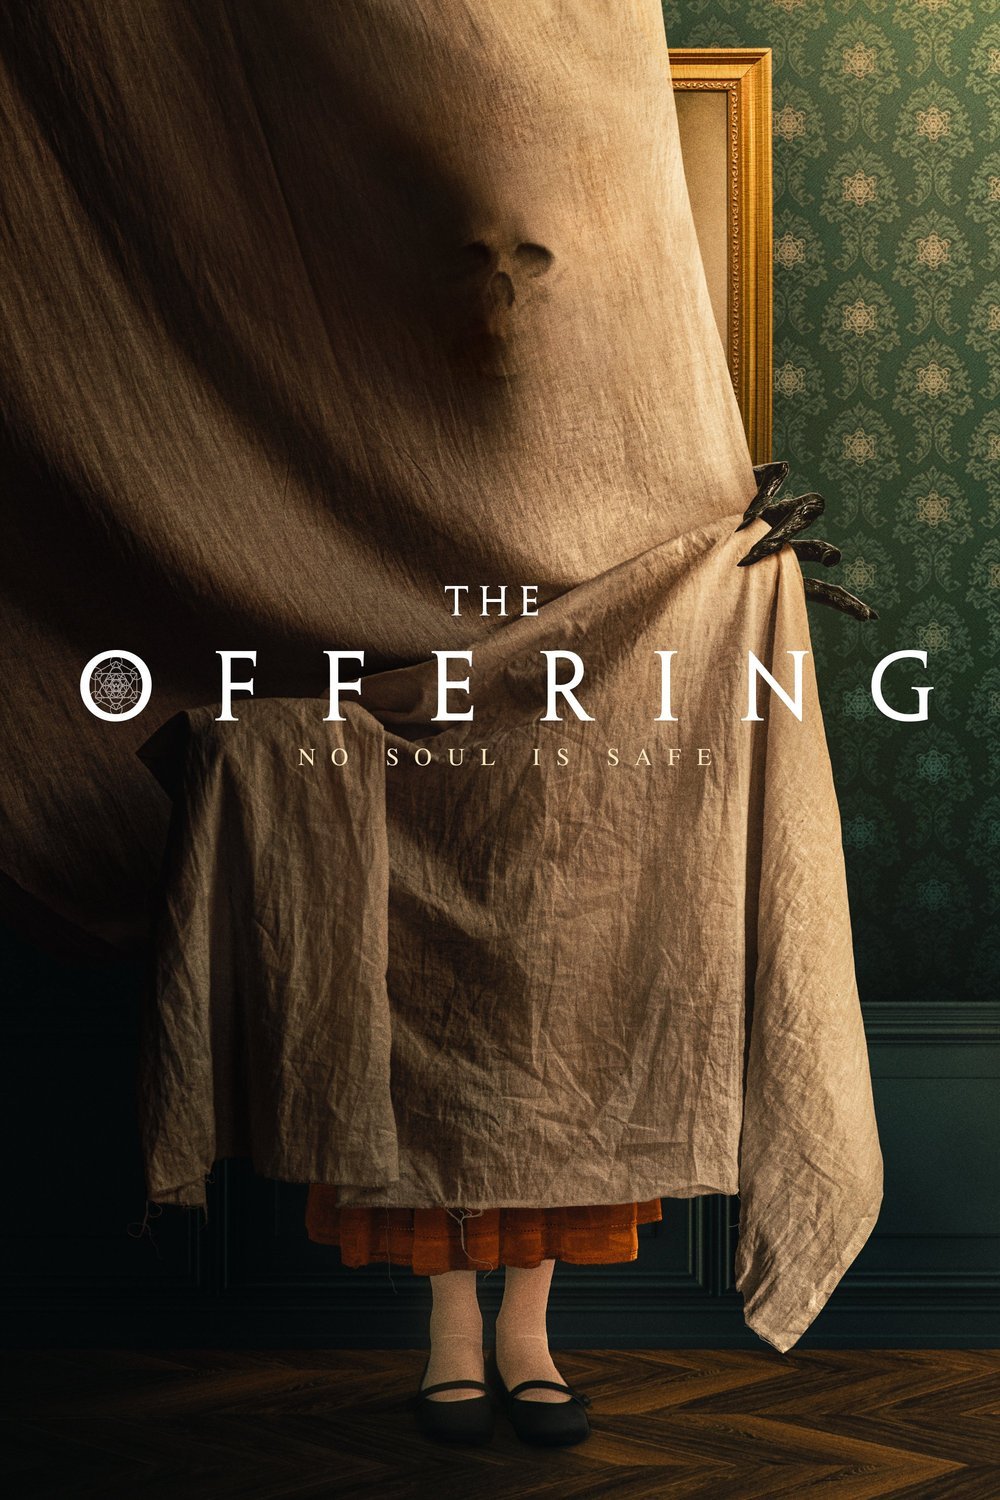 L'affiche du film The Offering